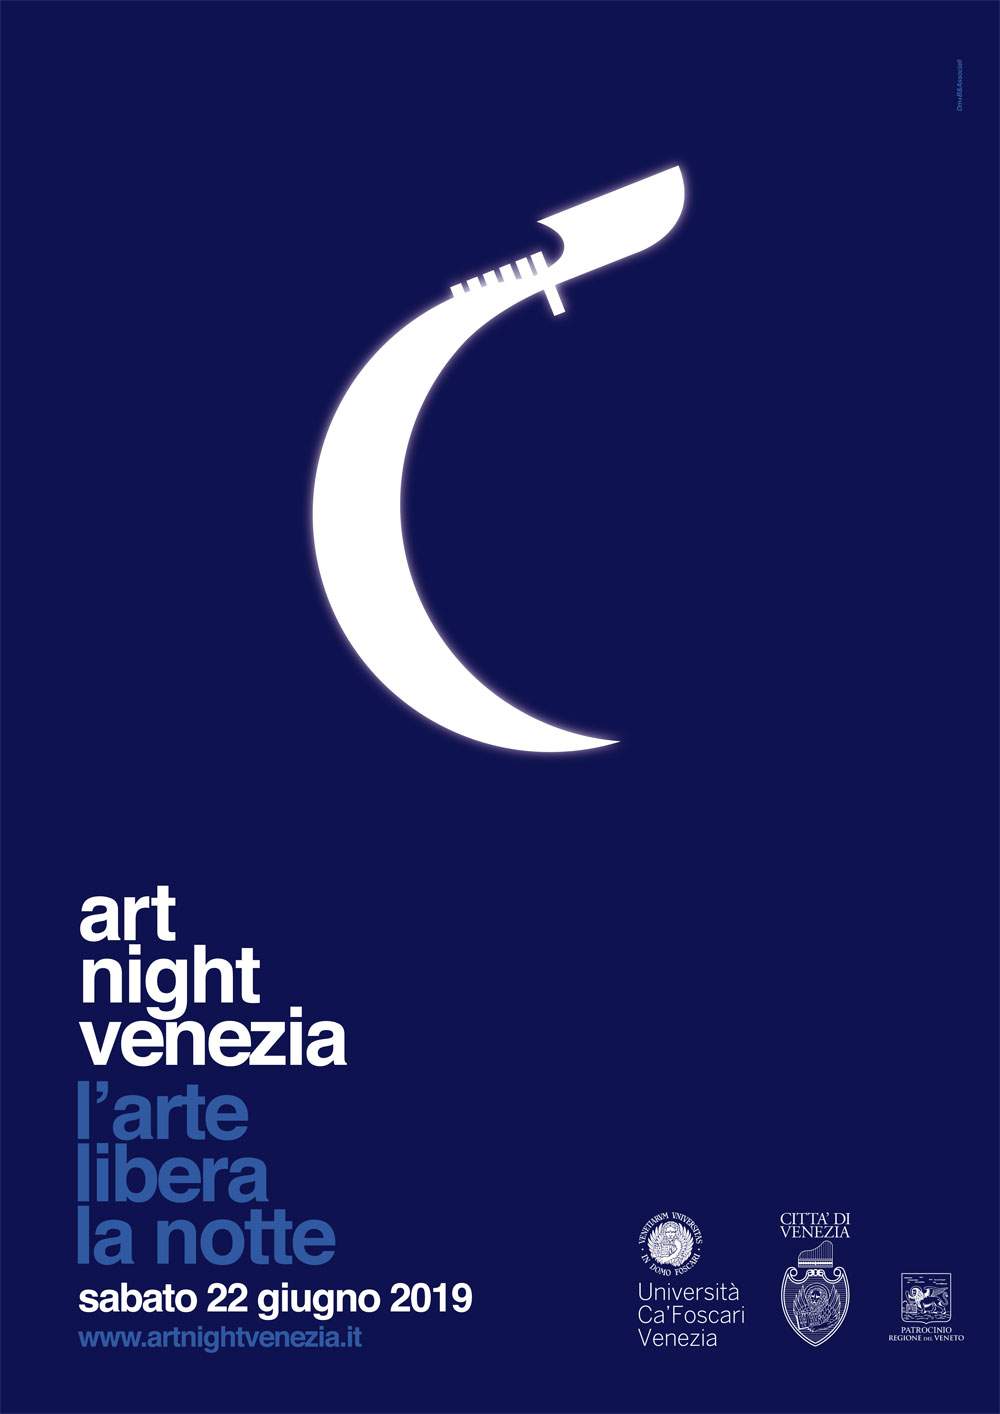 Saturday, June 22, 2019 the ninth edition of Art Night Venice